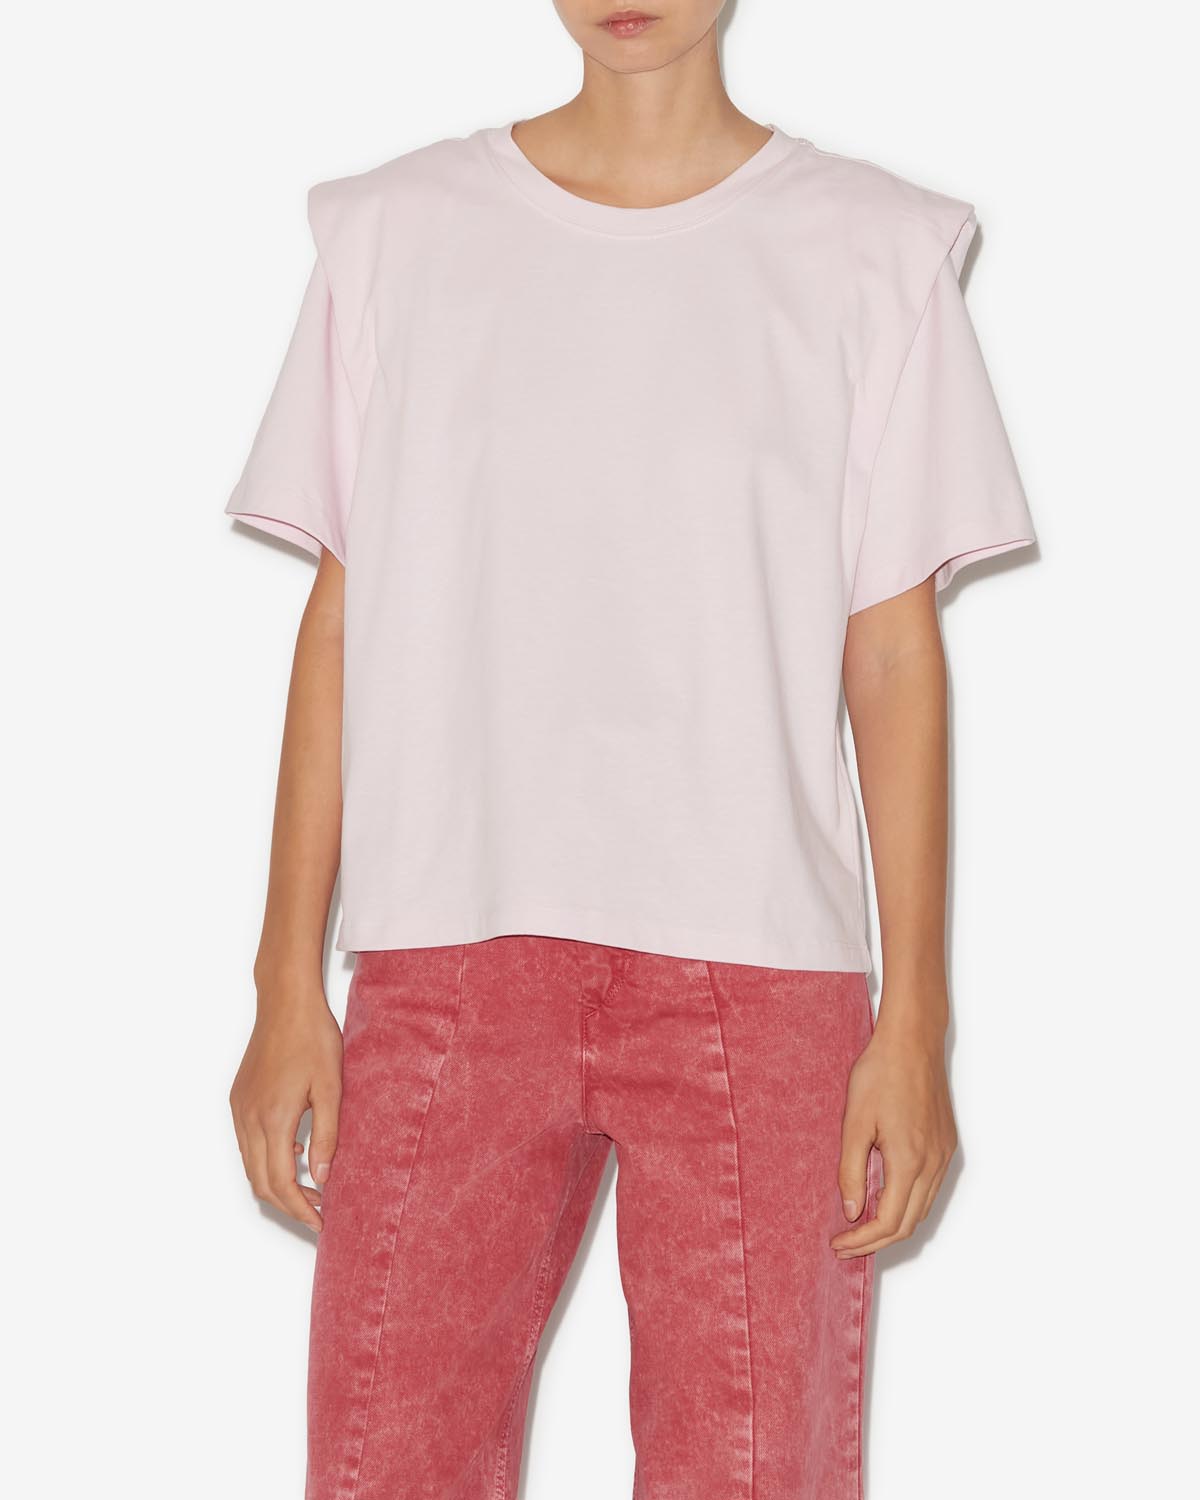 Zelitos ティーシャツ Woman Light pink 4